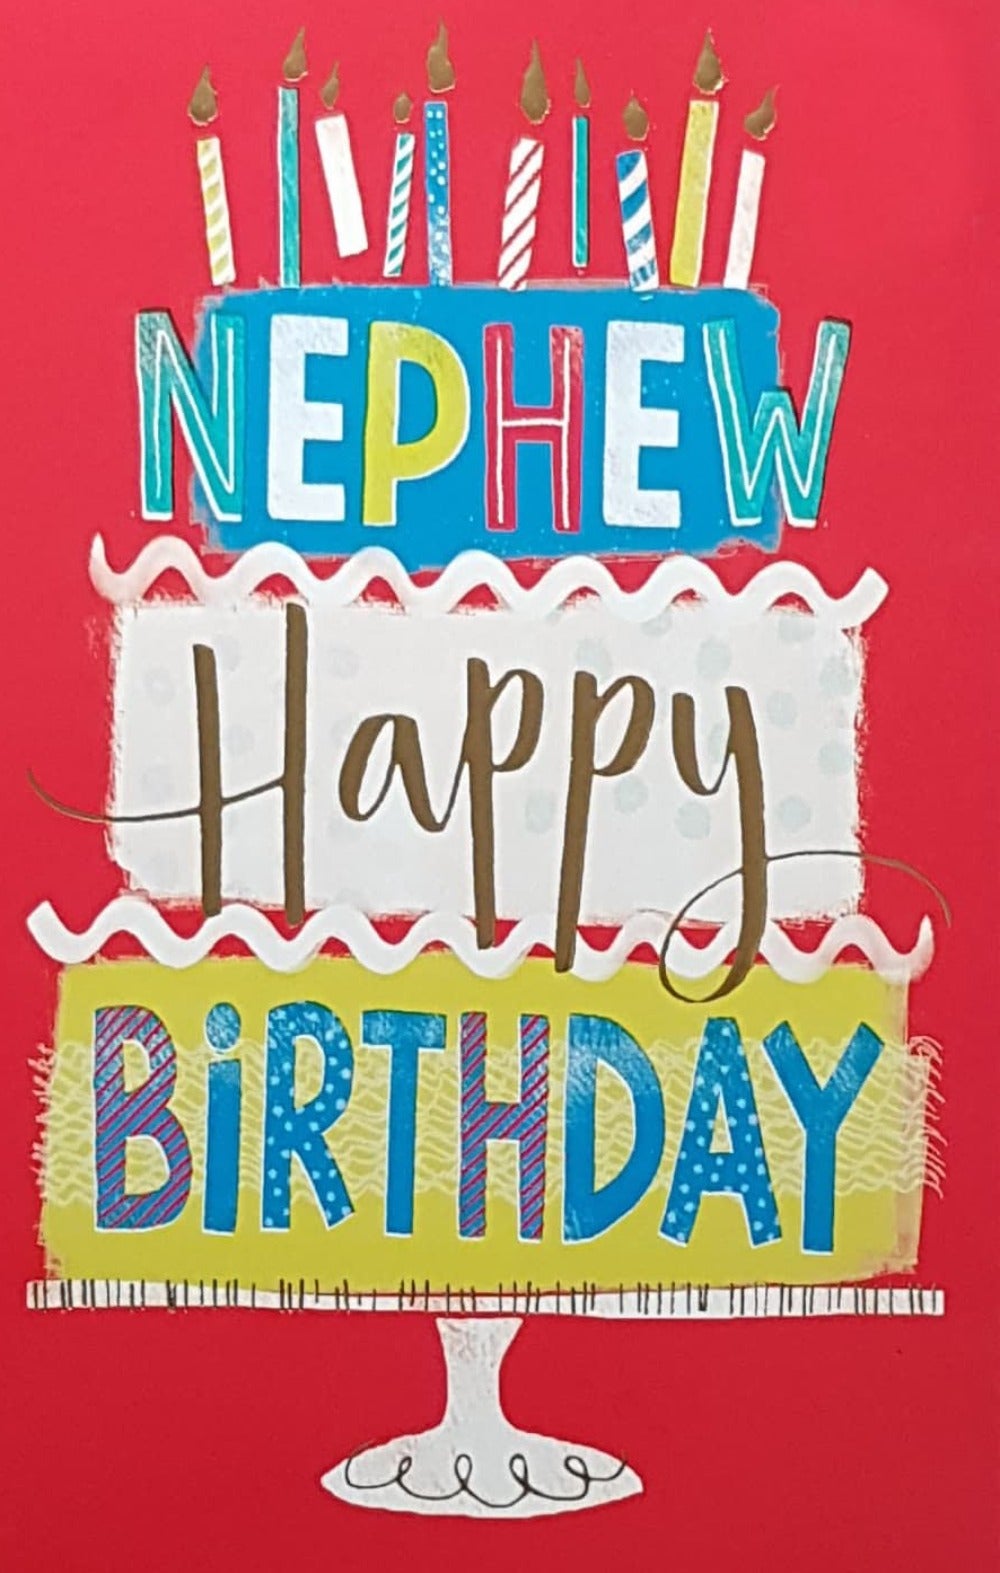 Birthday Card - Nephew / A Three Layered Birthday Cake